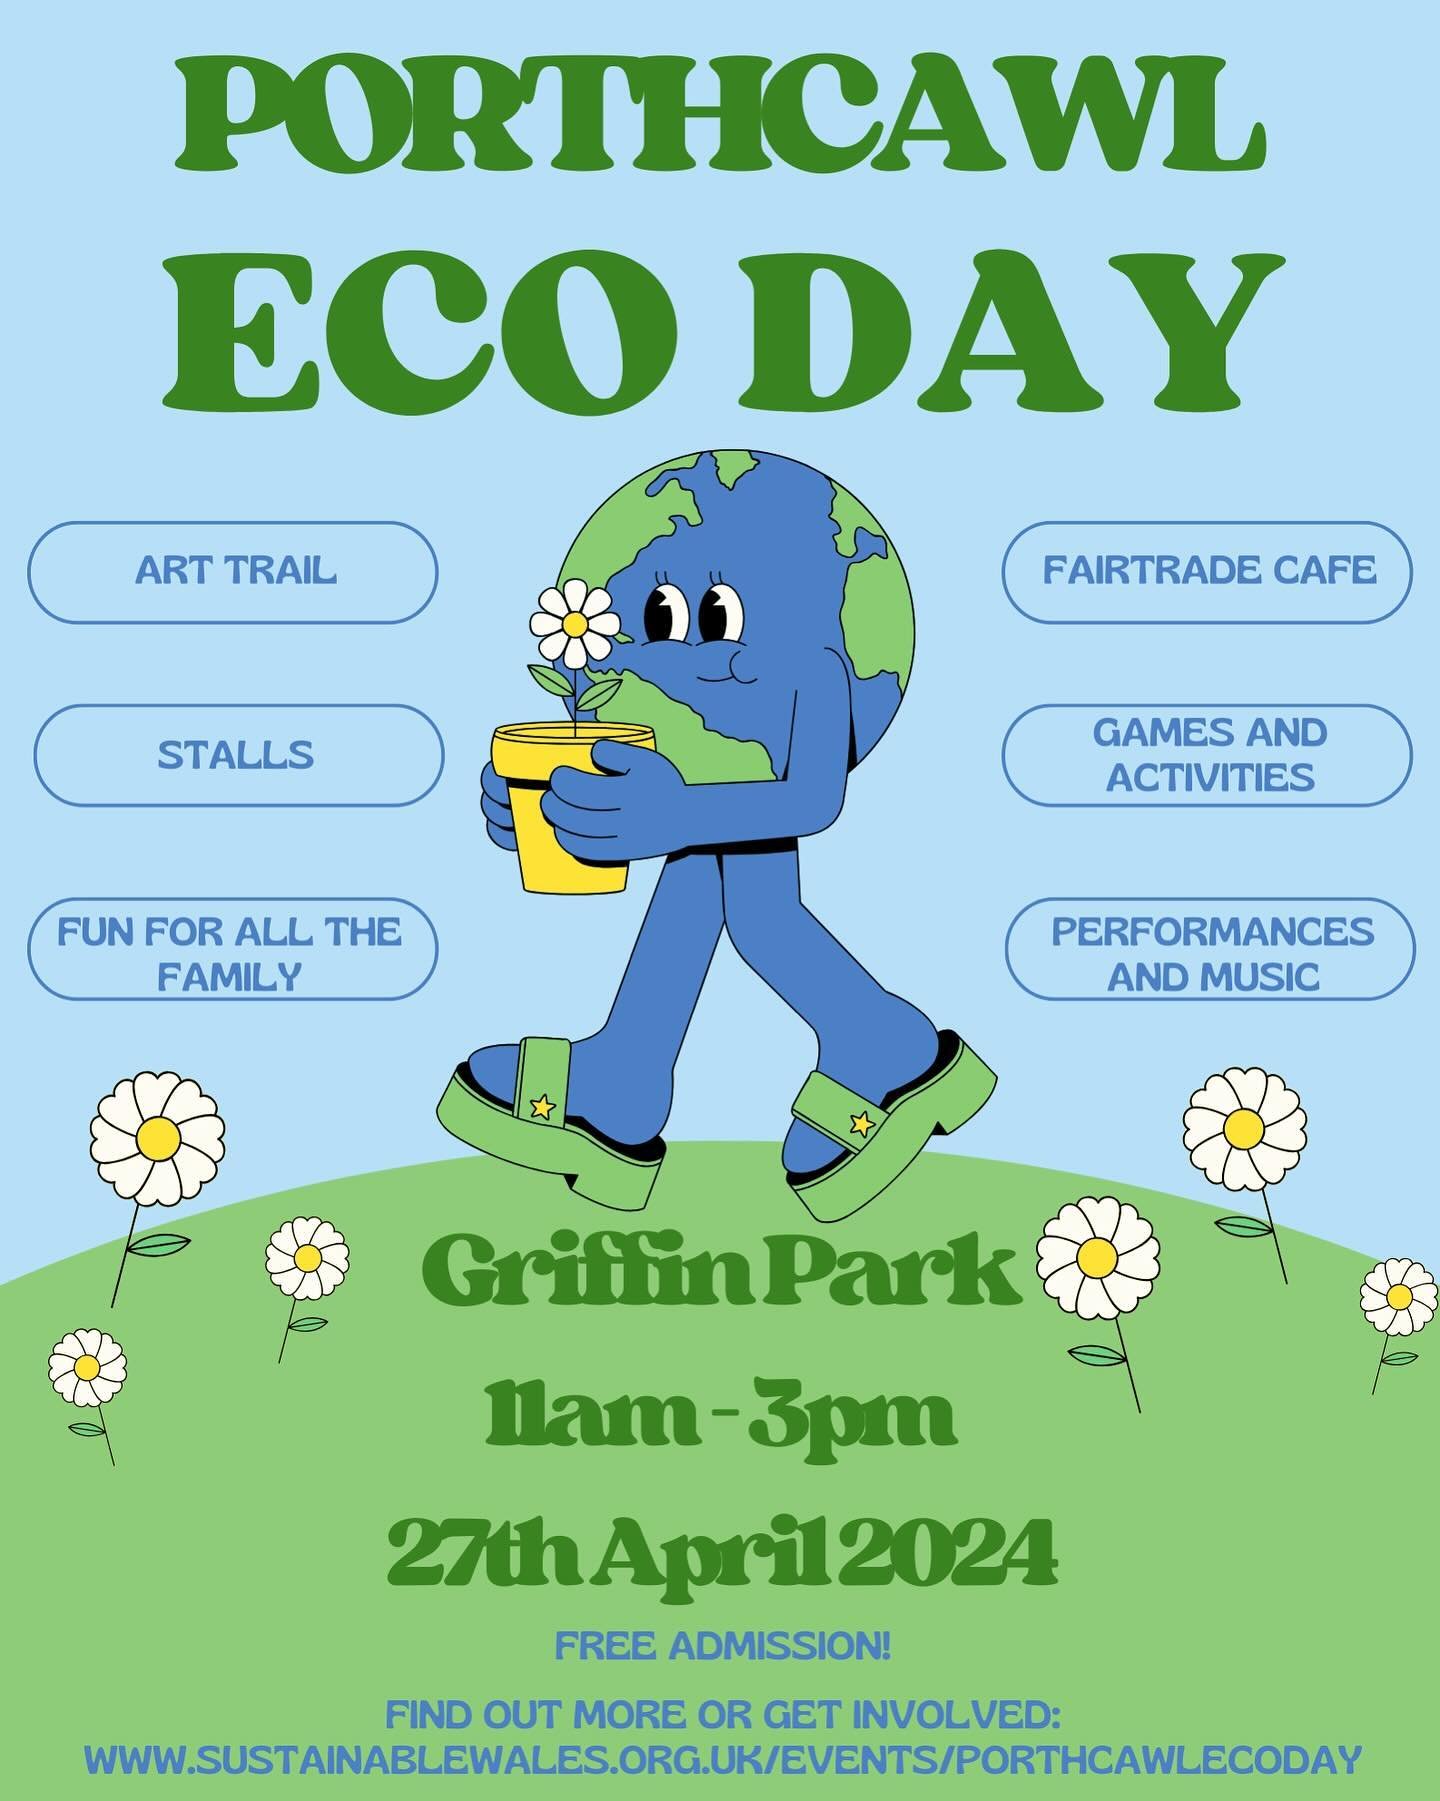 #porthcawl Eco Day this Saturday!